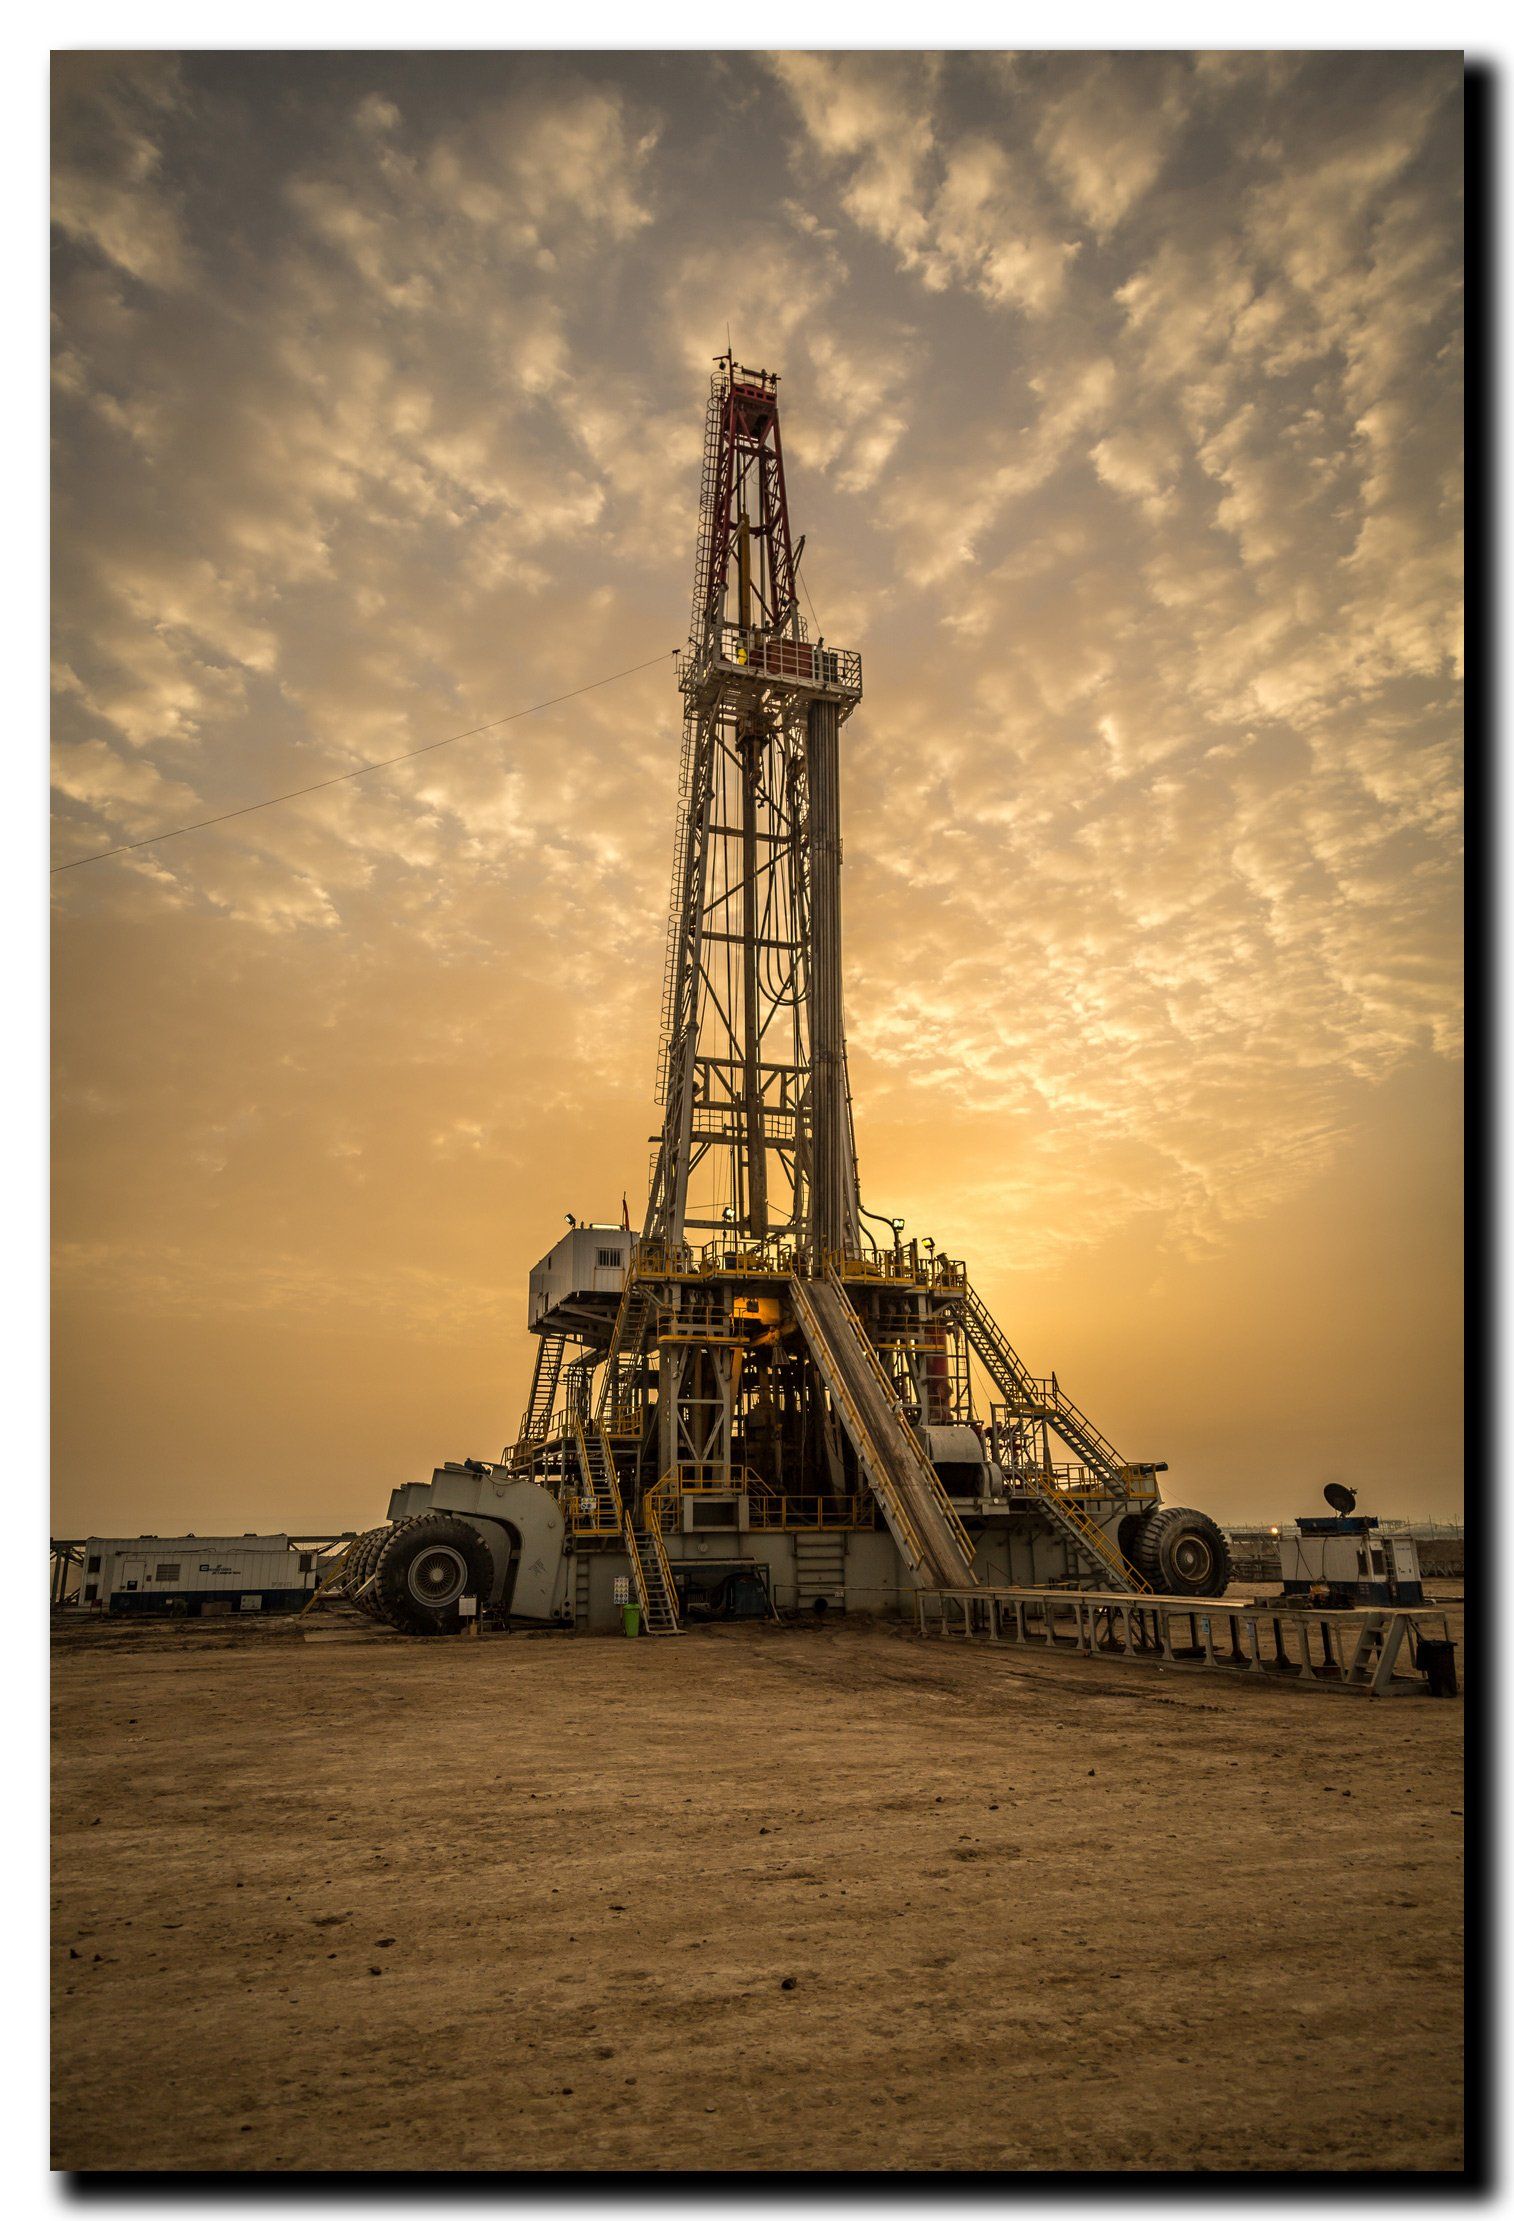 Drilling Rig - Laramie, WY - Watson Well Service